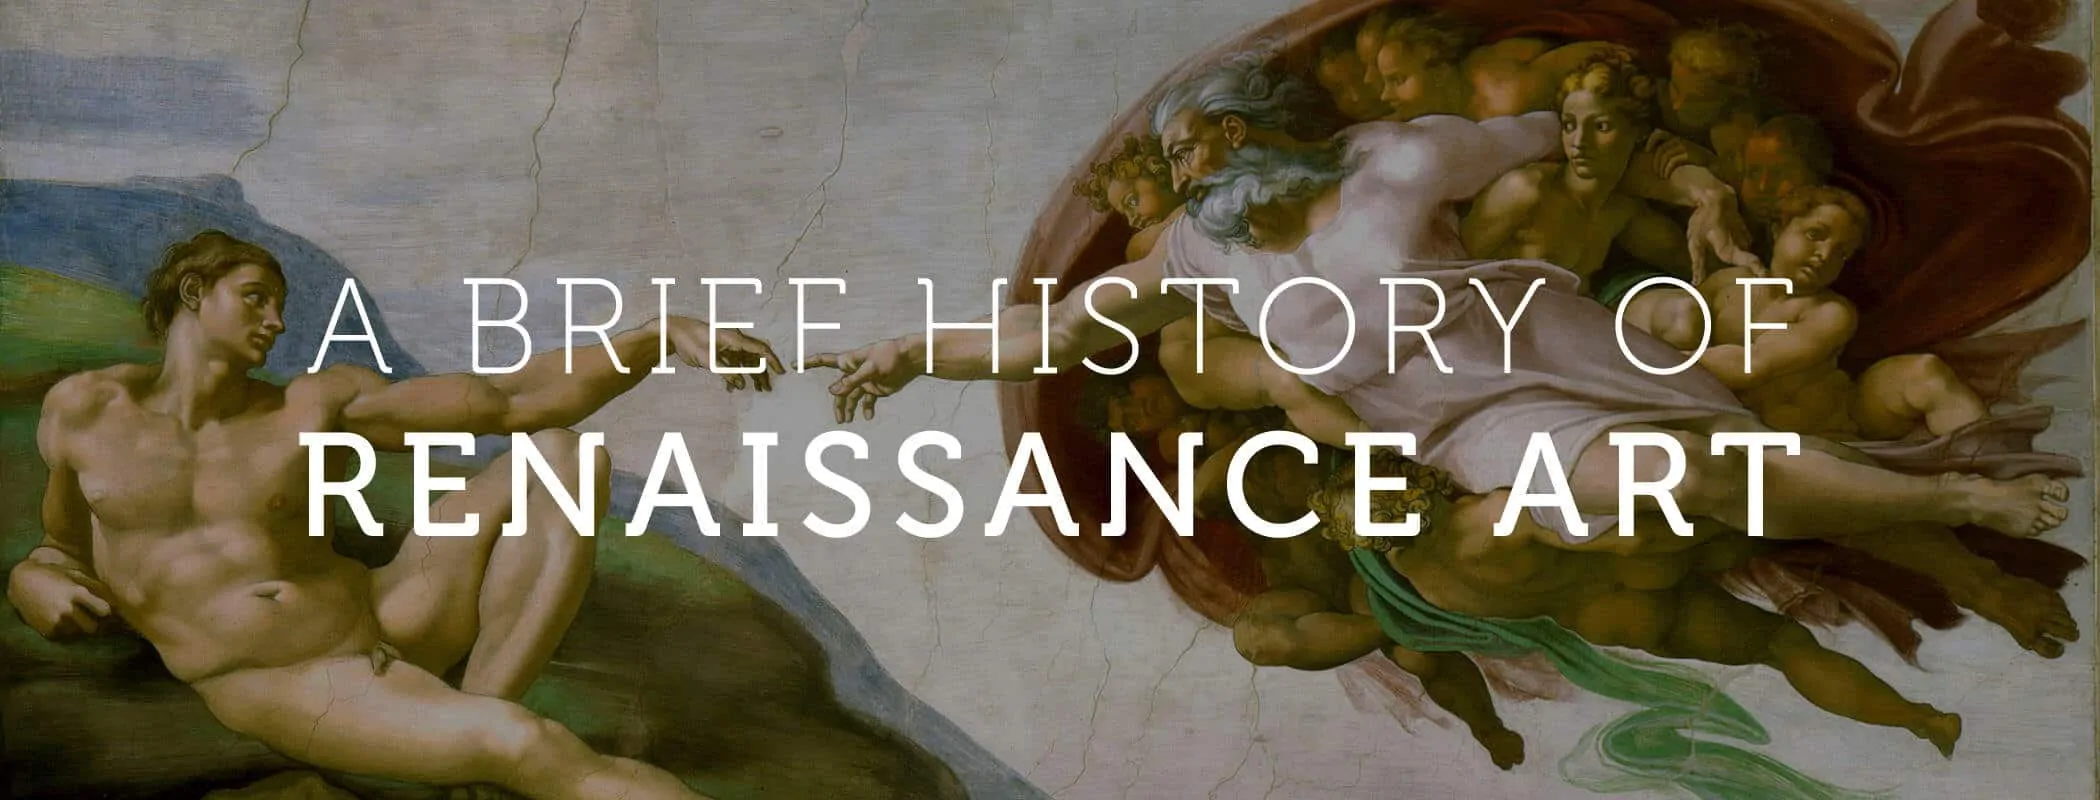 A Brief History of Renaissance Art